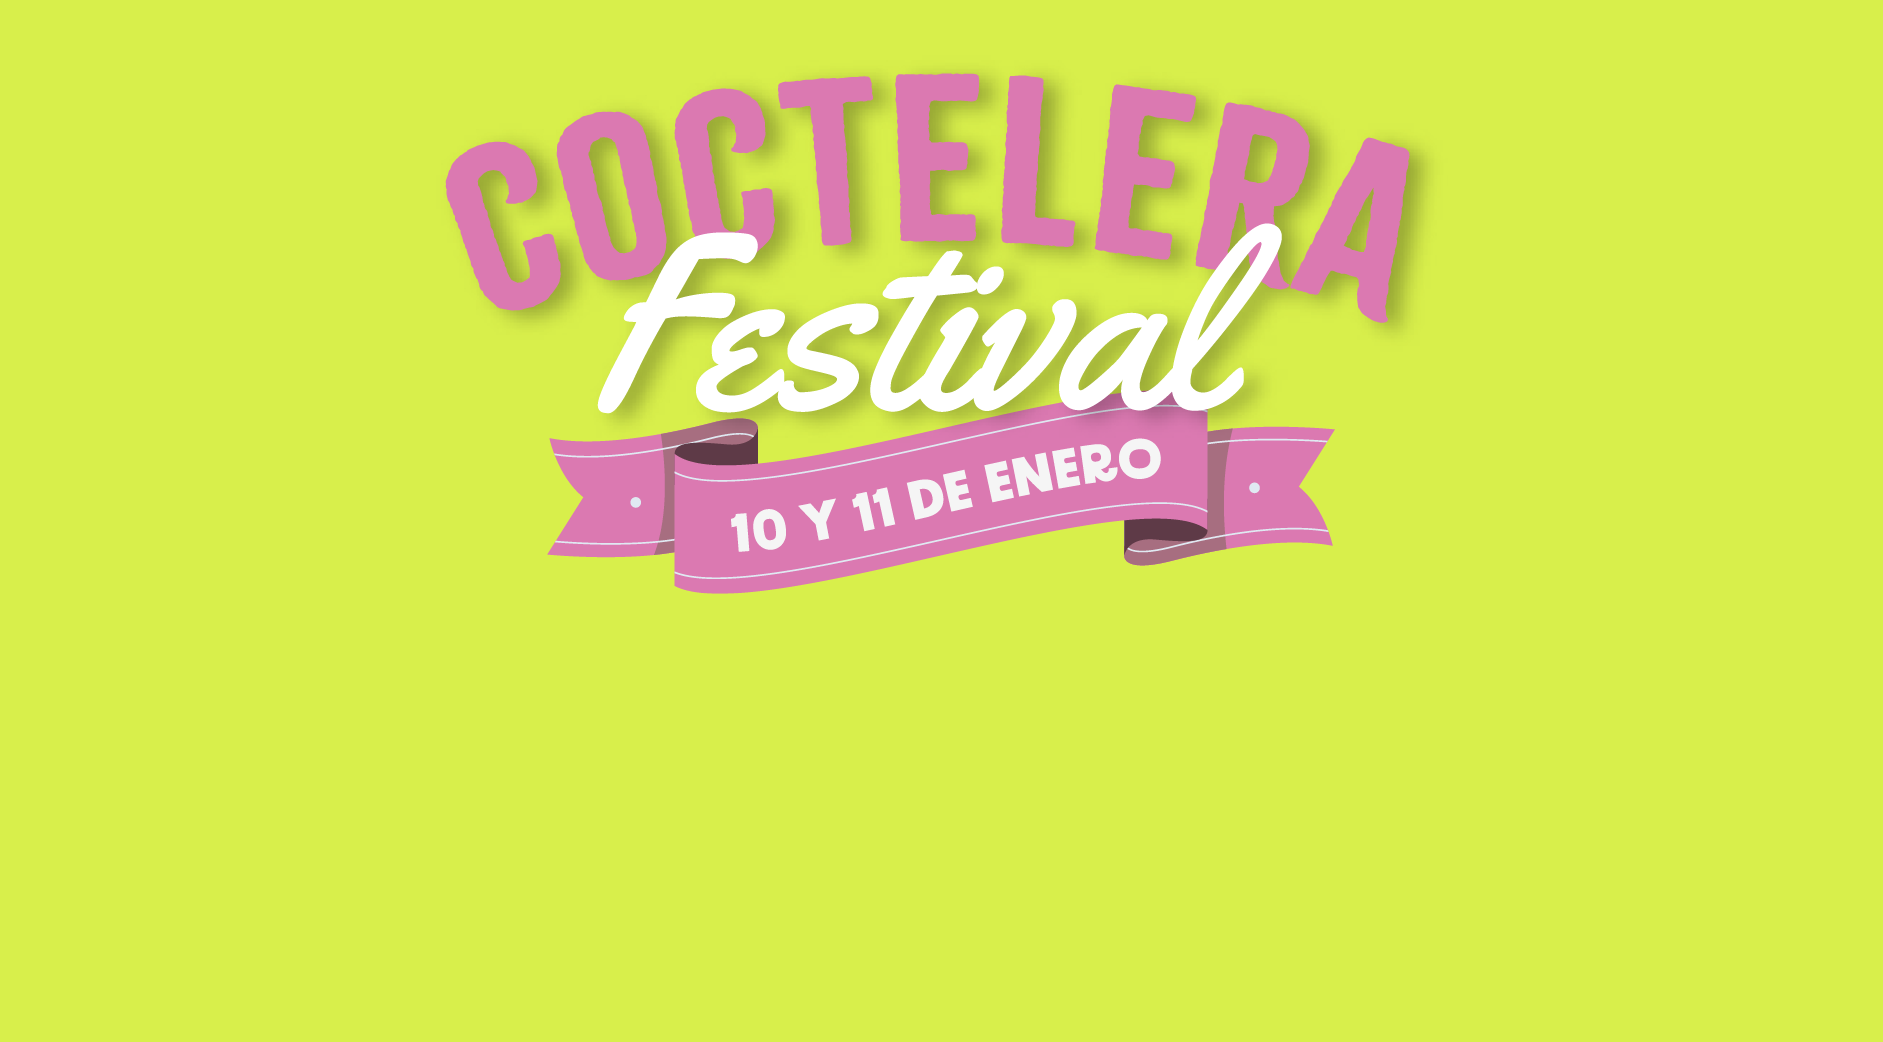 Coctelera Festival